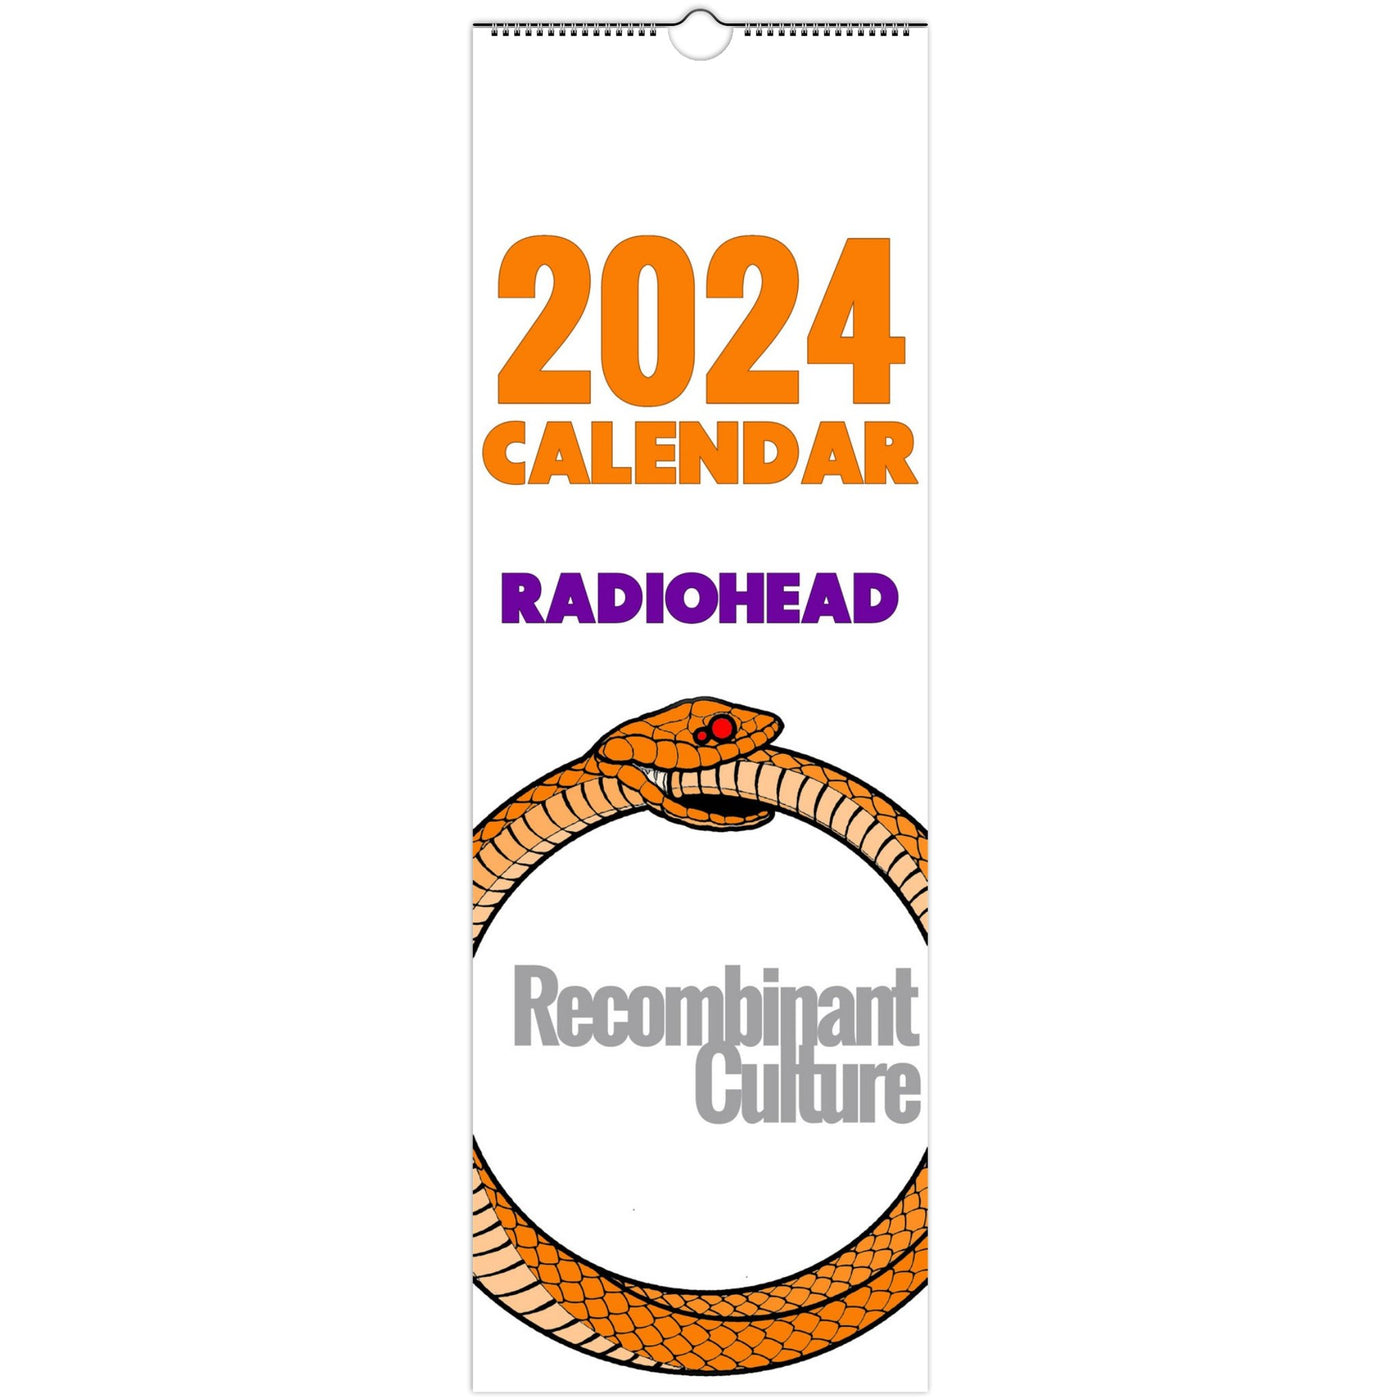 2024 Radiohead-inspired Wall Calendar - RecombinantCulture